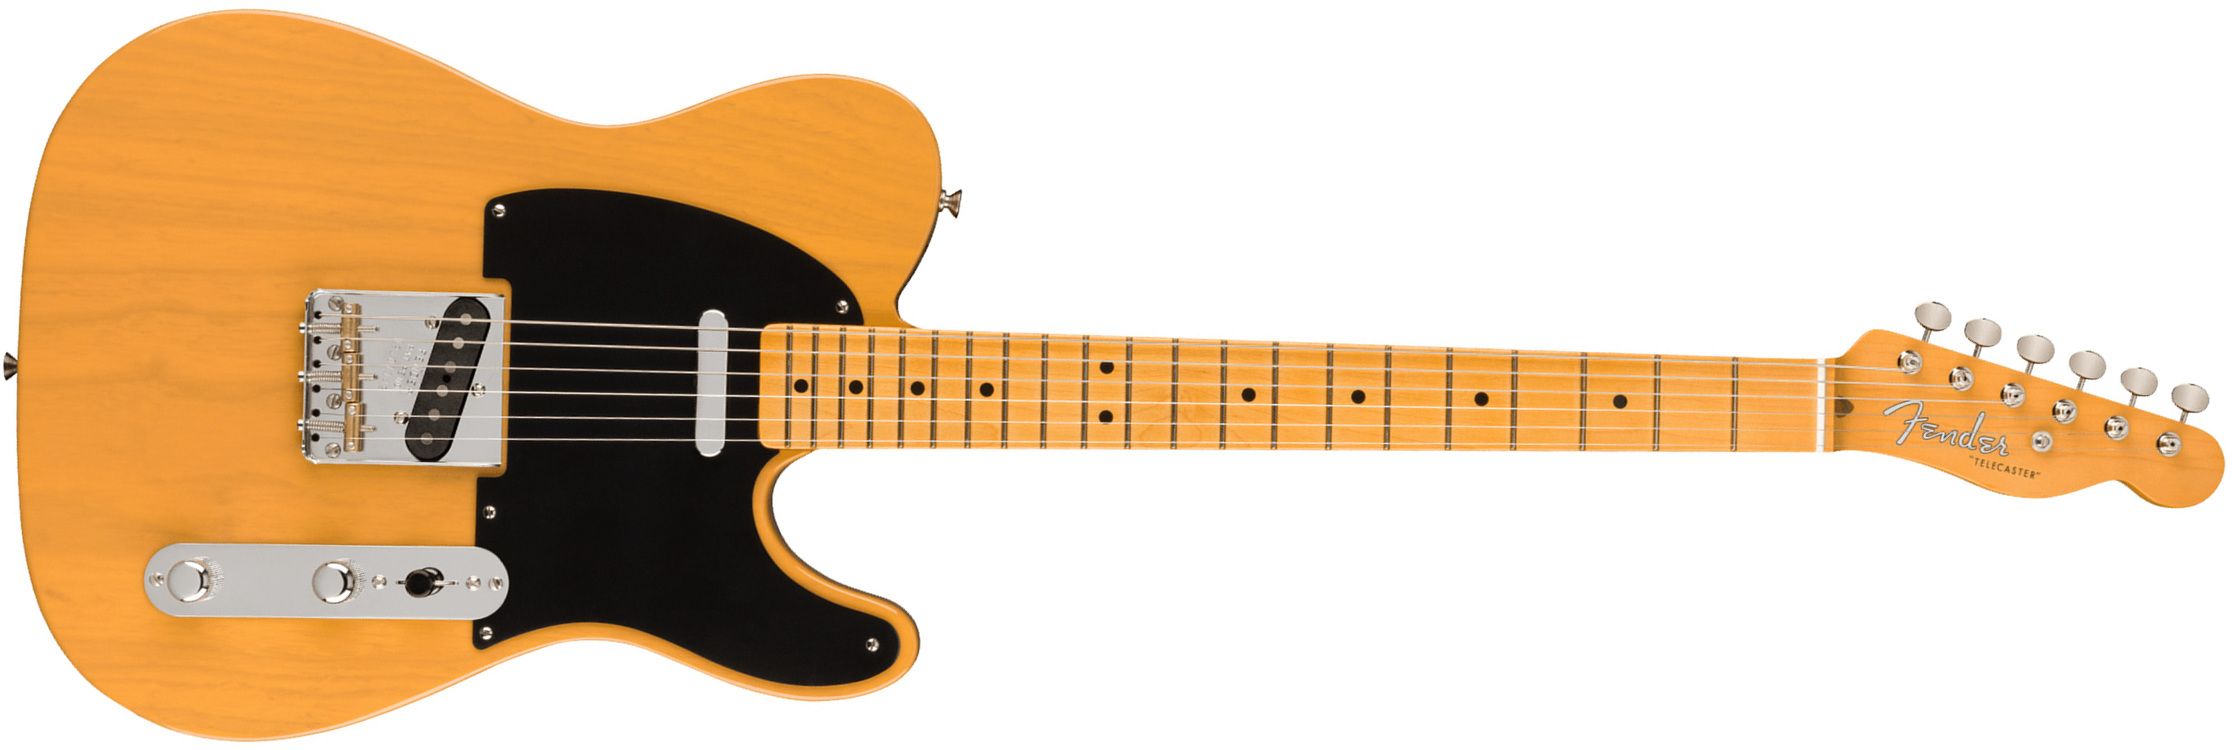 Fender Tele 1951 American Vintage Ii Usa 2s Ht Mn - Butterscotch Blonde - Televorm elektrische gitaar - Main picture